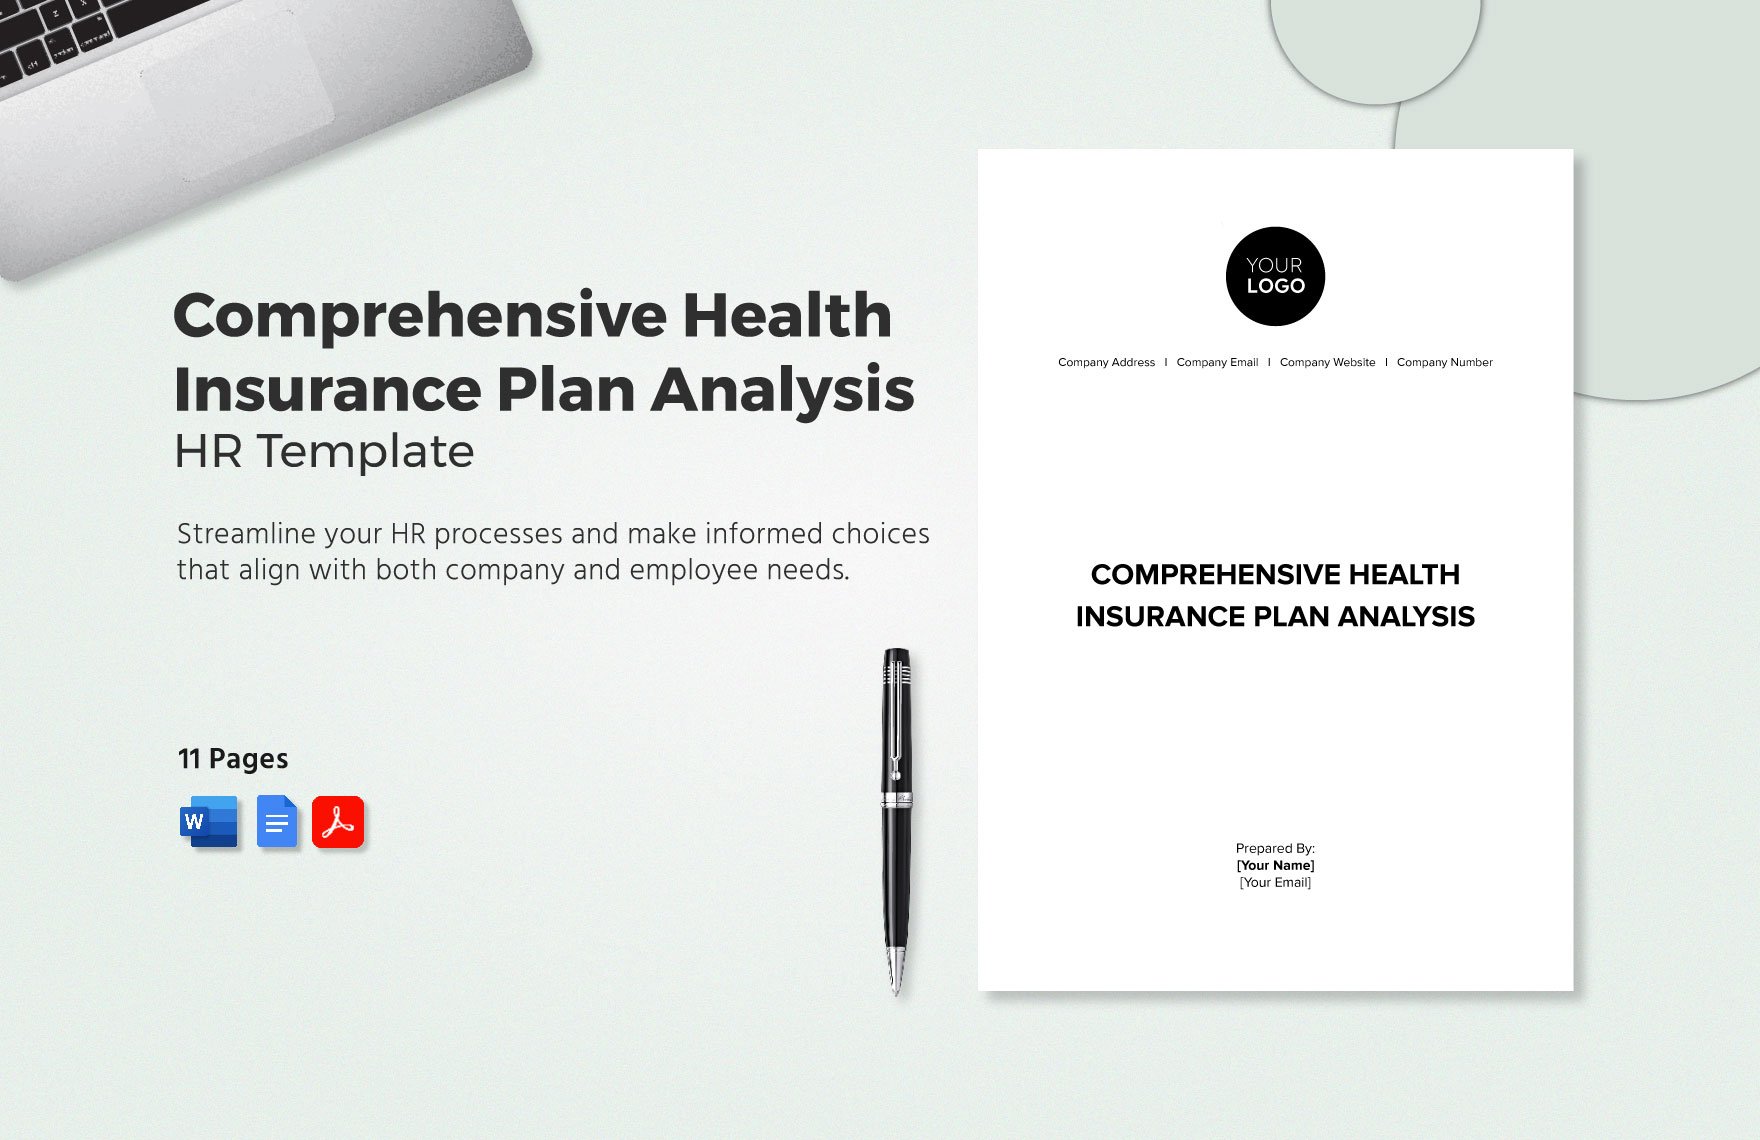 Comprehensive Health Insurance Plan Analysis HR Template